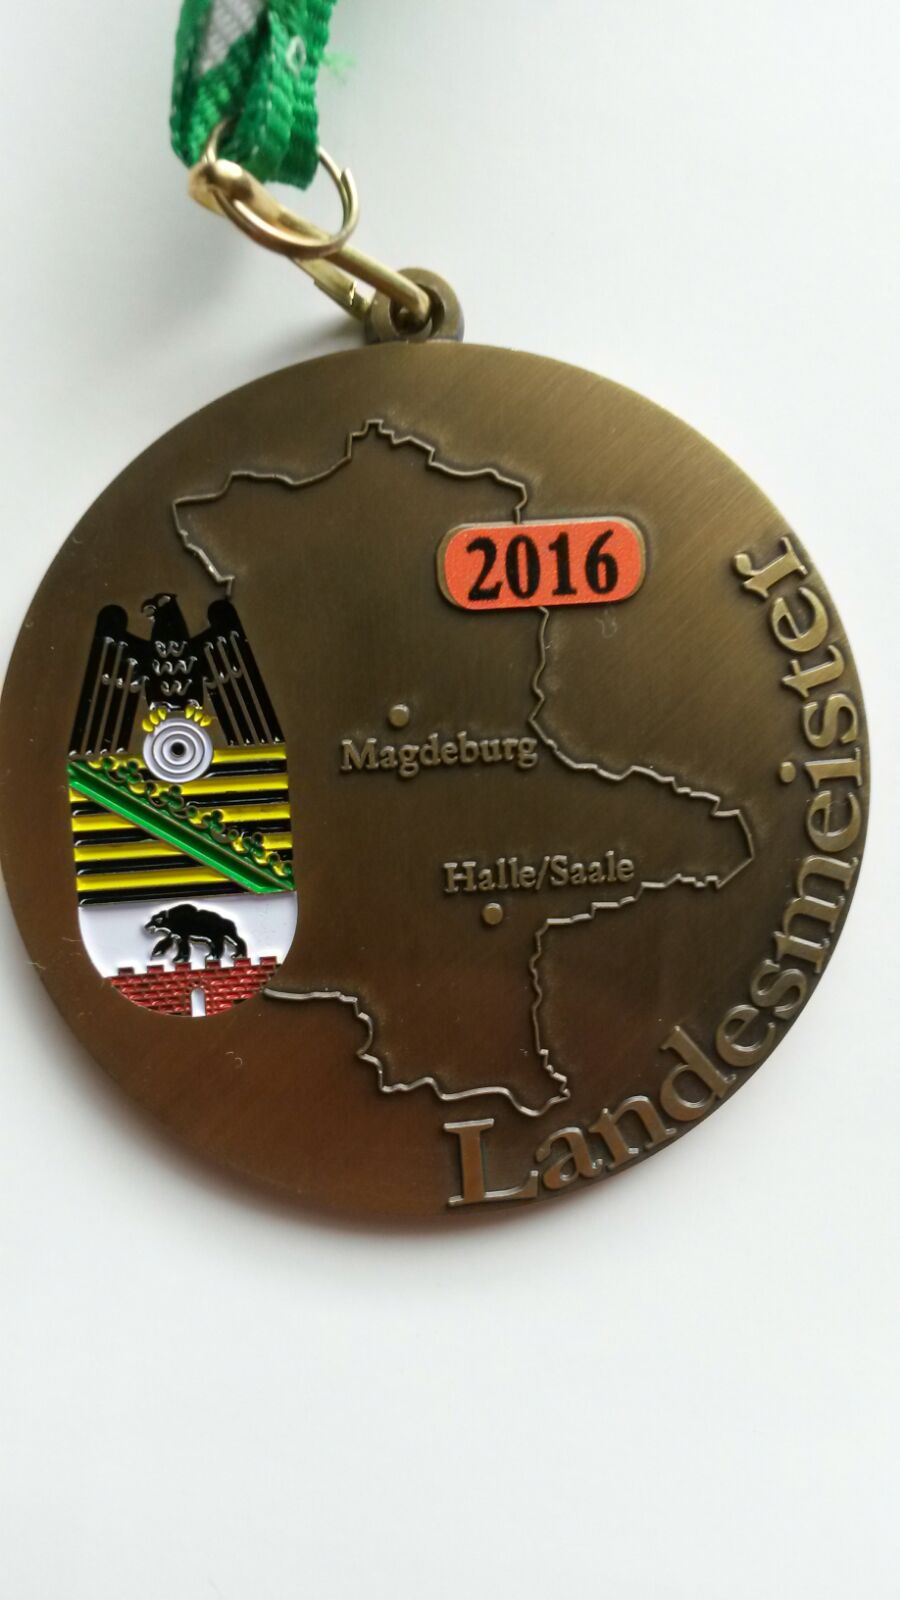 Die Medaille des Landesmeisters 2016 im Trap